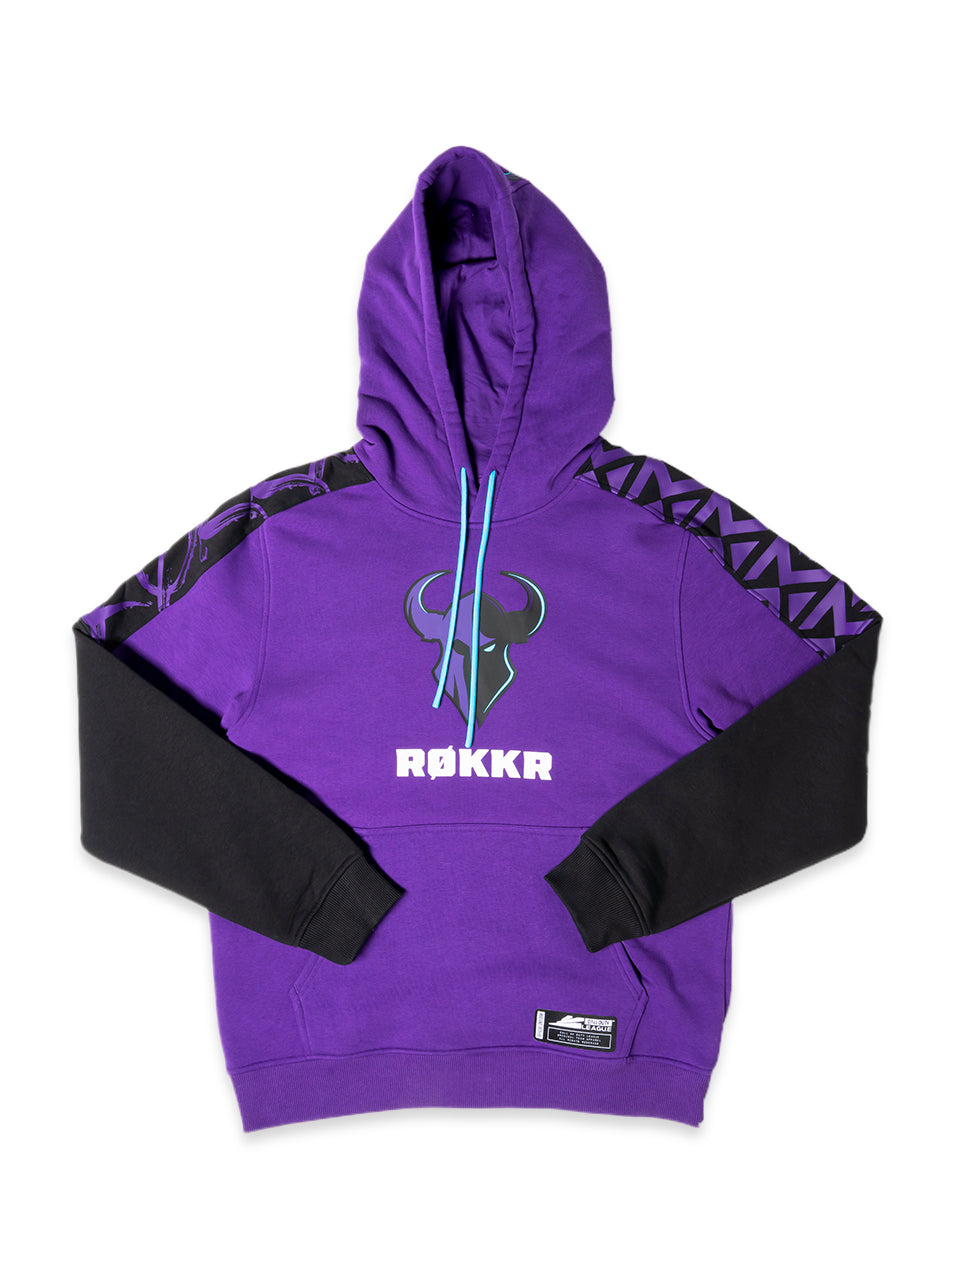 Minnesota RØKKR Official Player Kit - Hoodie Purple